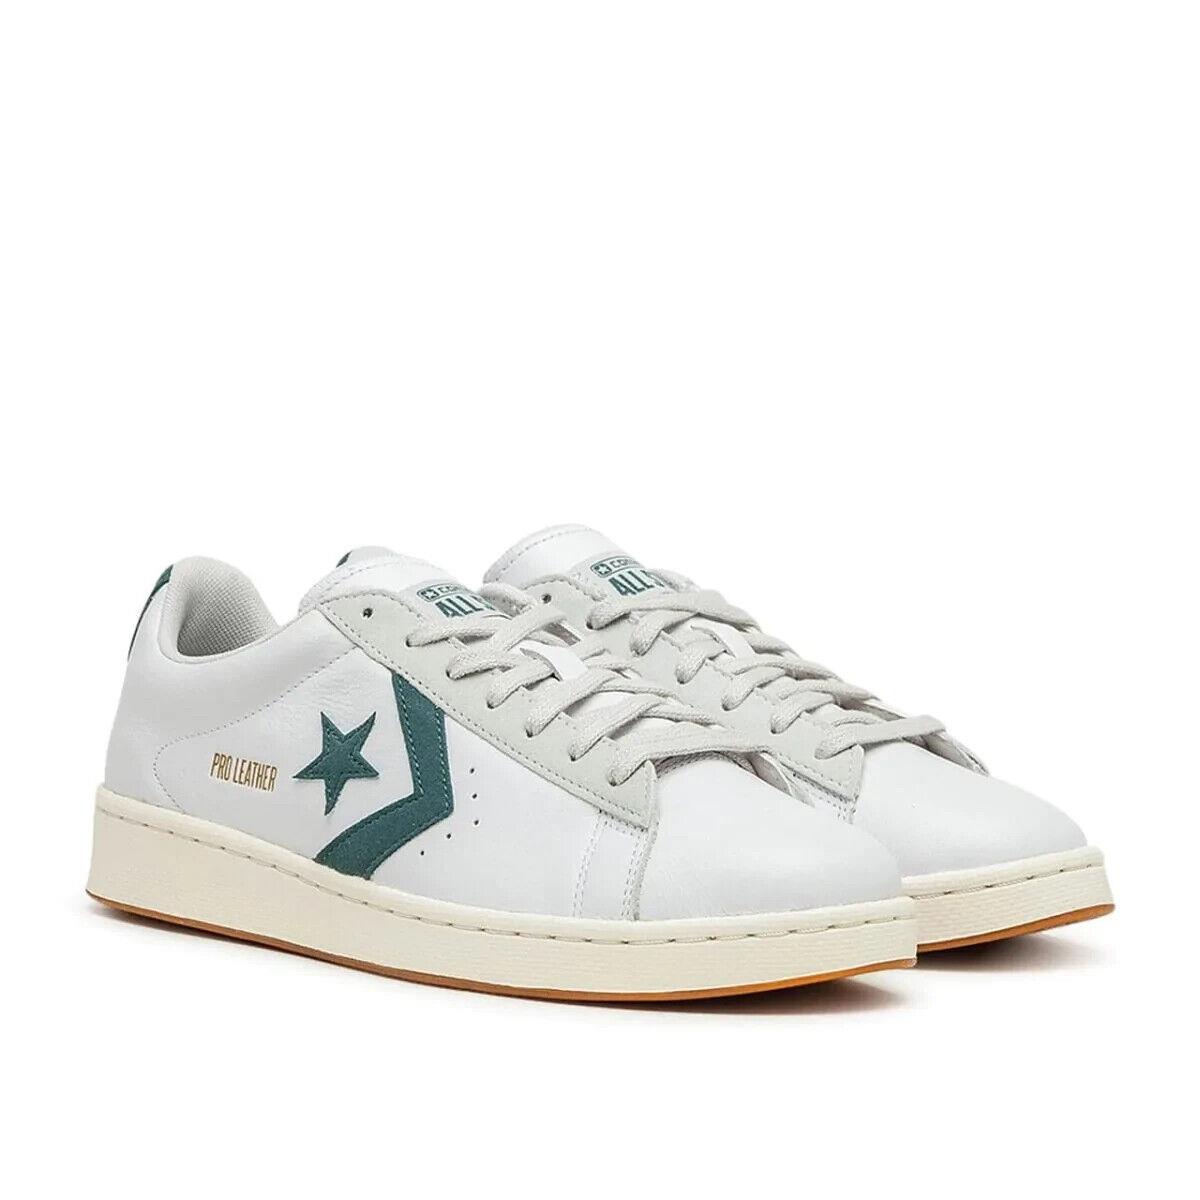 Converse Pro Leather OX 171317C Unisex White Sneaker Shoes Size 4.5M/6W C454 - White